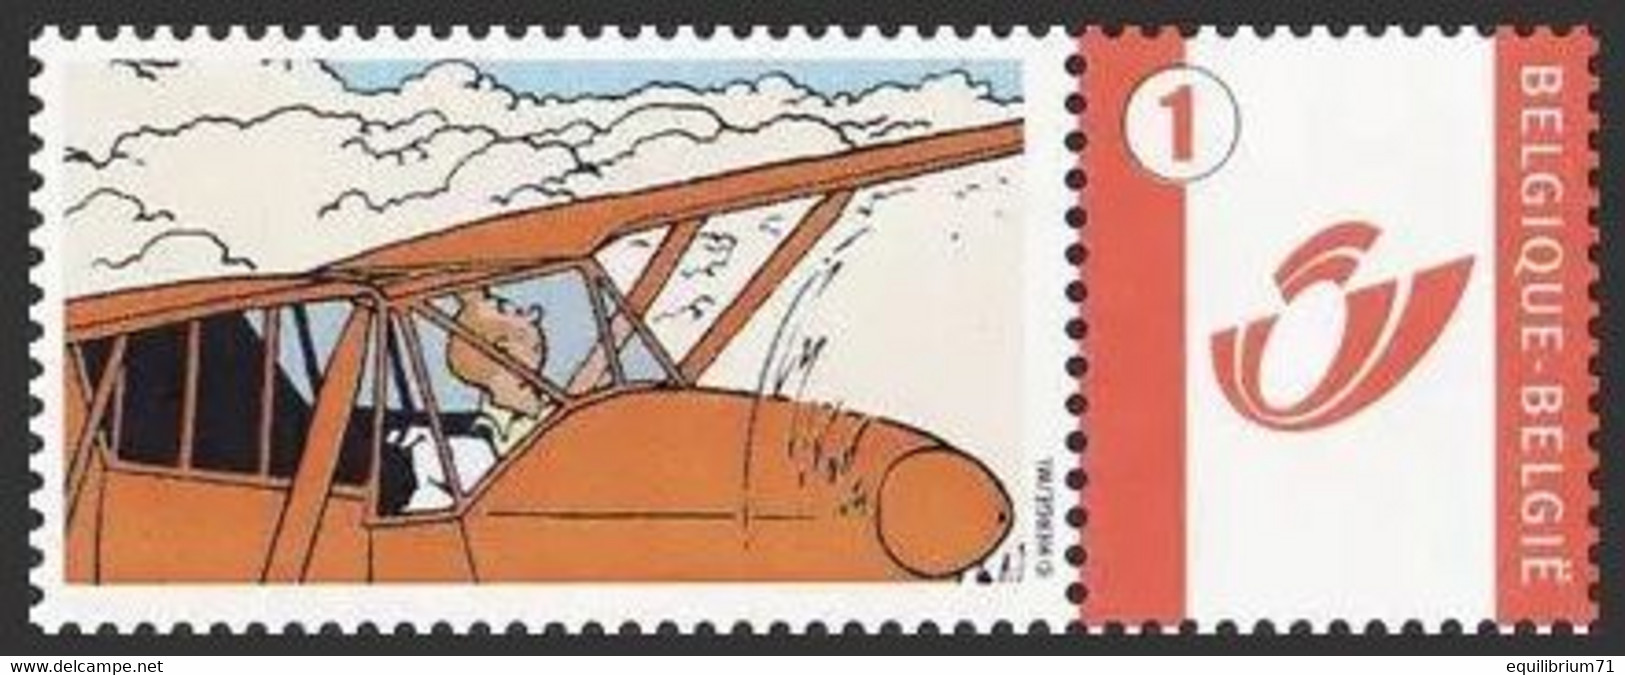 DUOSTAMP/MYSTAMP**  Tintin, Avion/Kuifje, Vliegtuig/Tim, Flugzeug/Tintin, Airplane - (Hergé) - Sous Blister/Verpakt - Philabédés